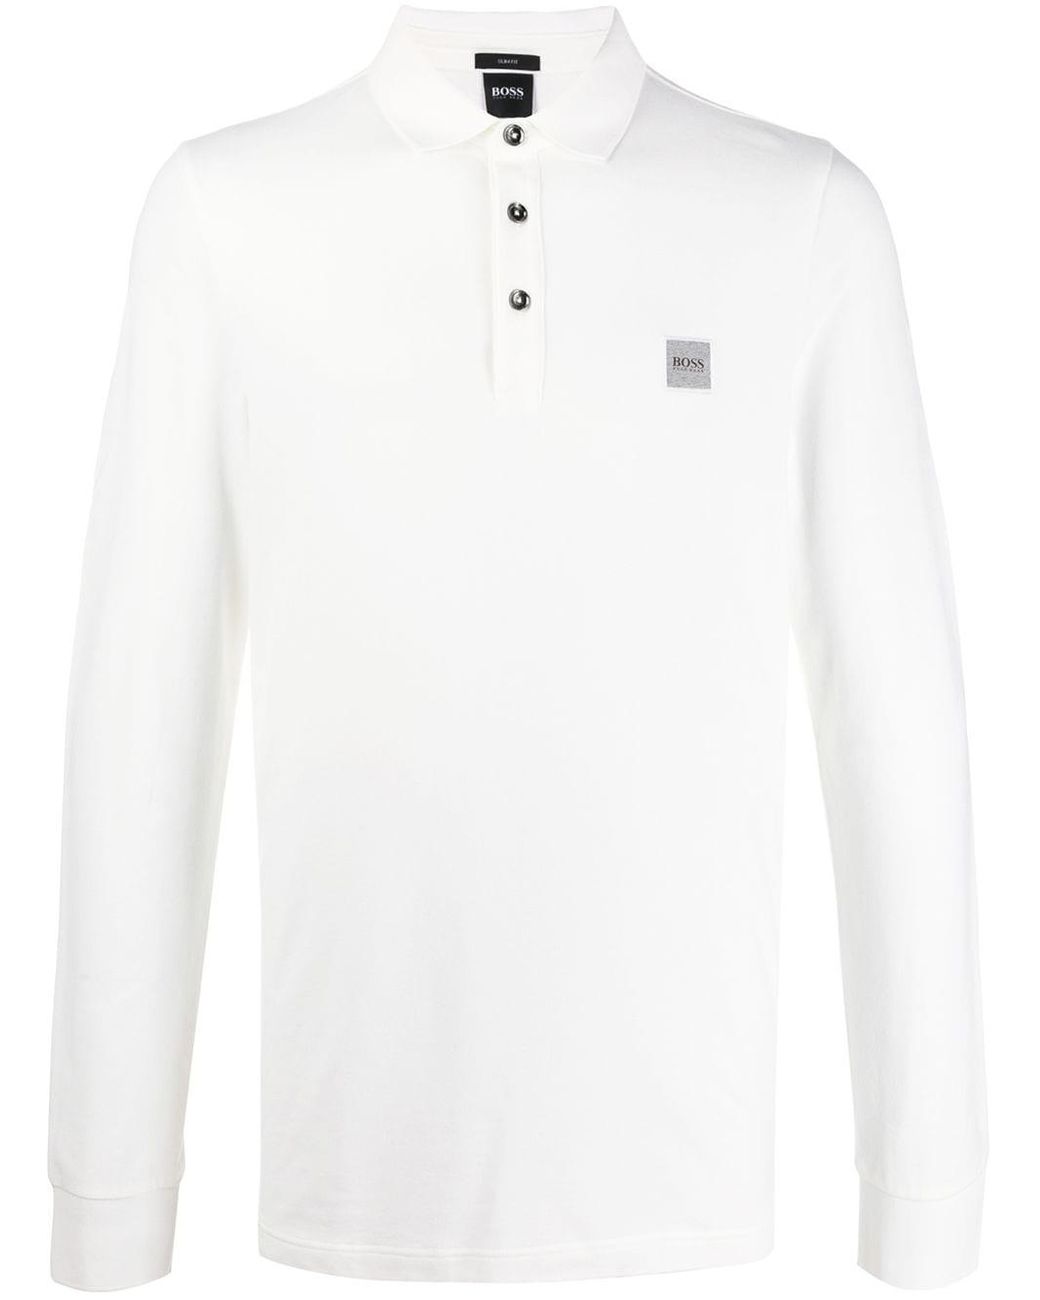 BOSS Cotton Embroidered Logo Longsleeved Polo Shirt in White for Men - Lyst